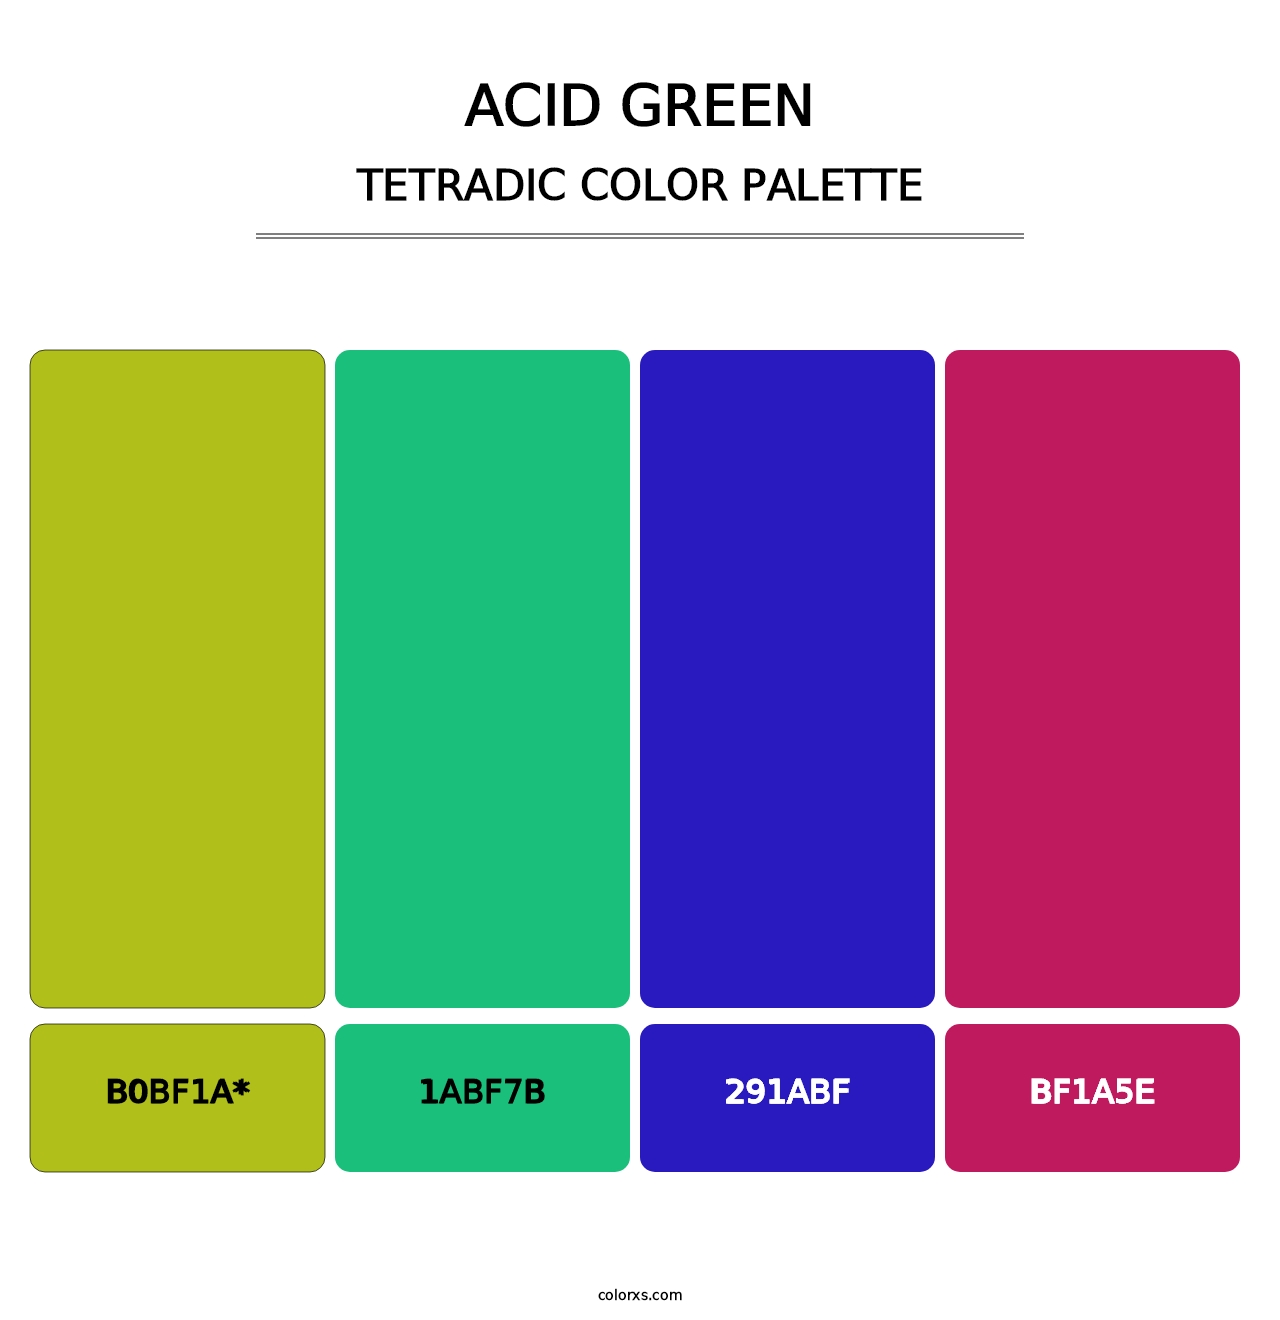 Acid Green - Tetradic Color Palette